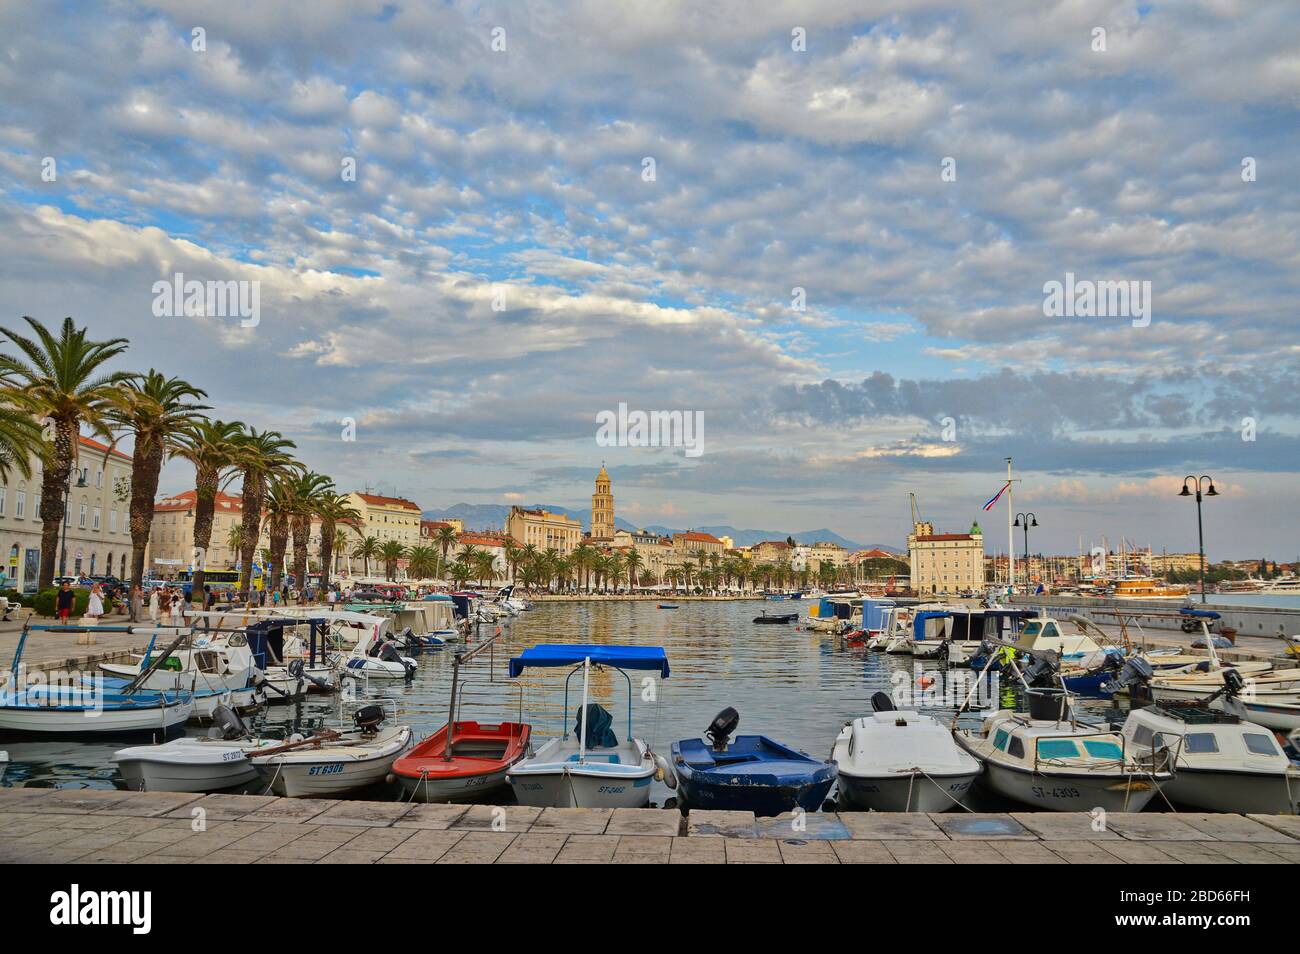 Panoramic view of Split, city in Croatia Stock Photo